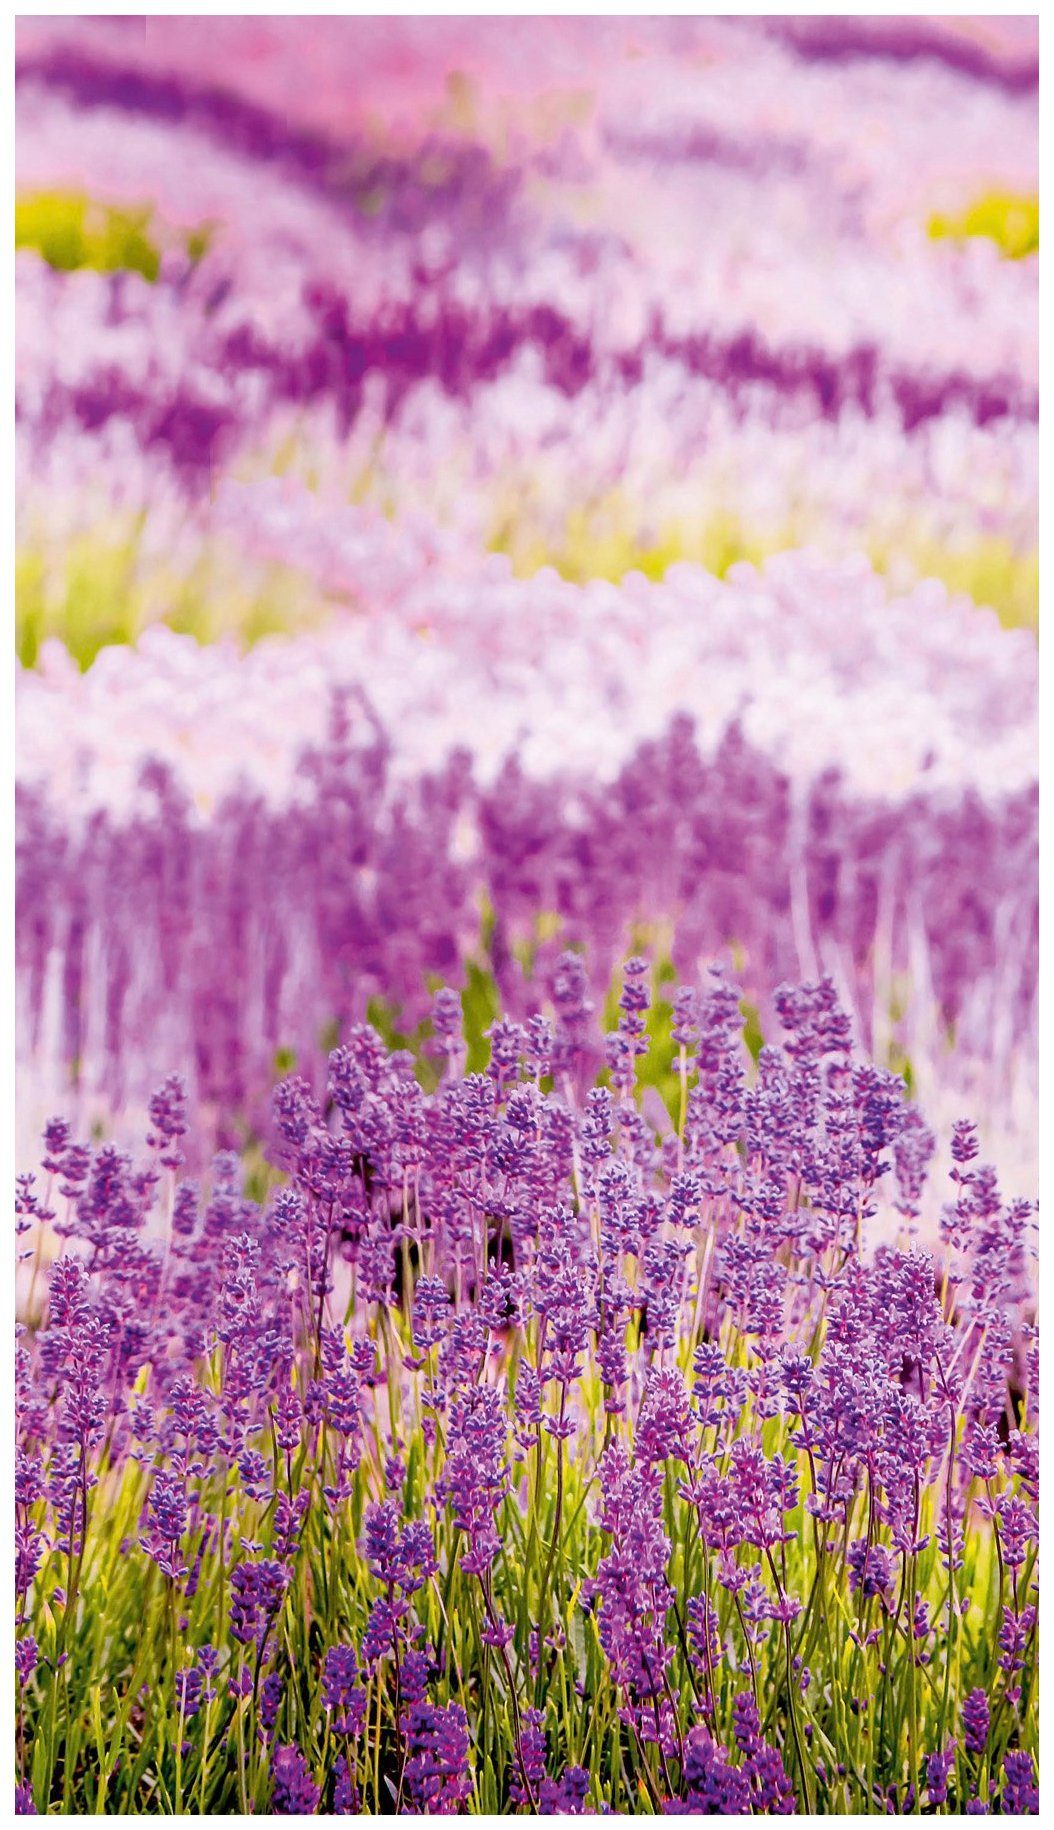 Bodenmeister Fototapete Lavendel Provence lila